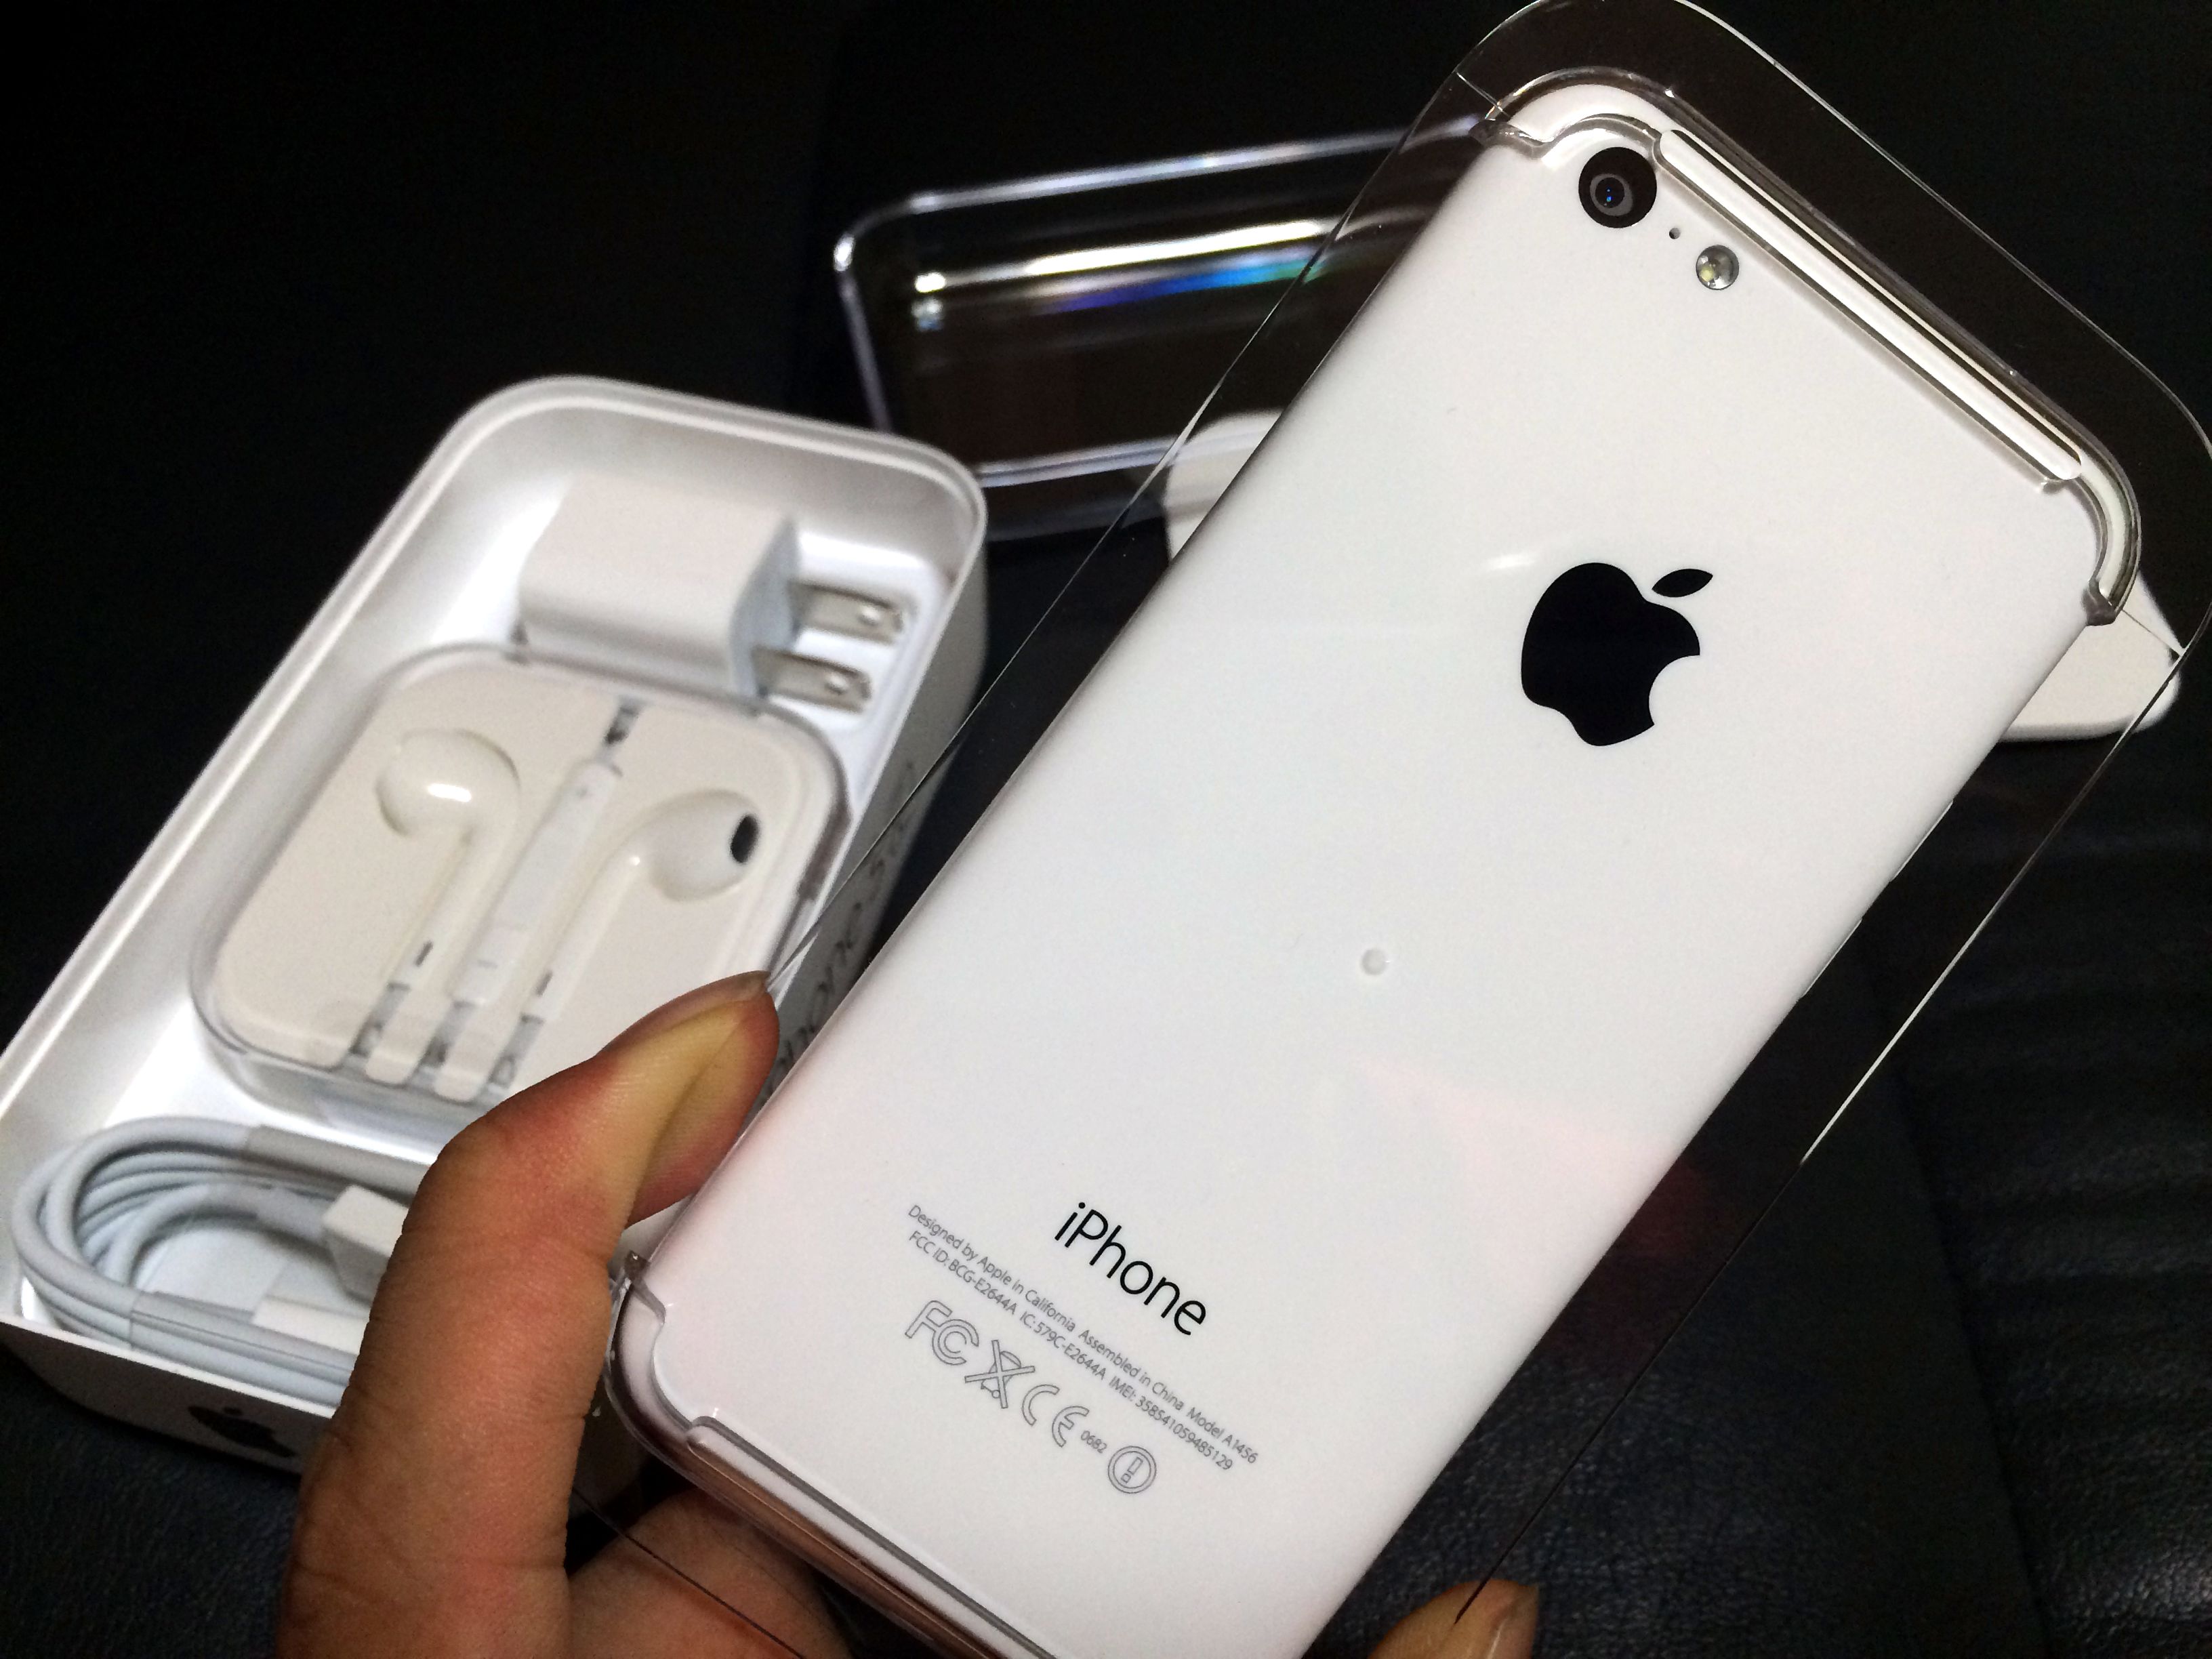 iPhone5c sim free white